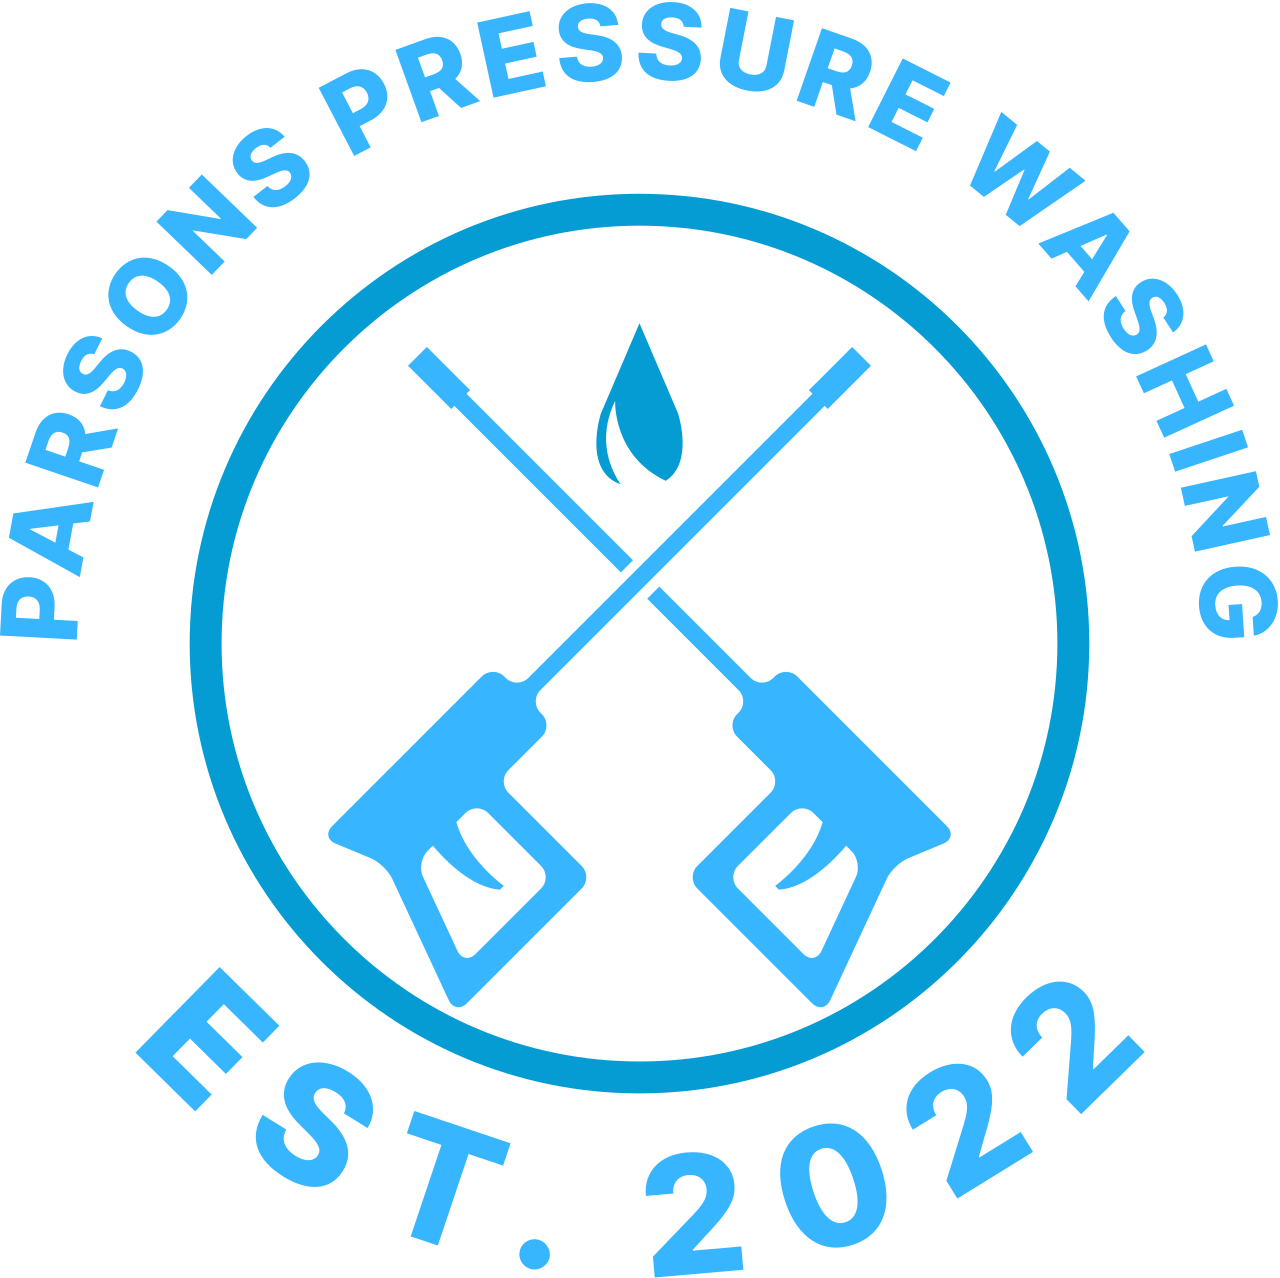 PARSONS PRESSURE WASHING's logo